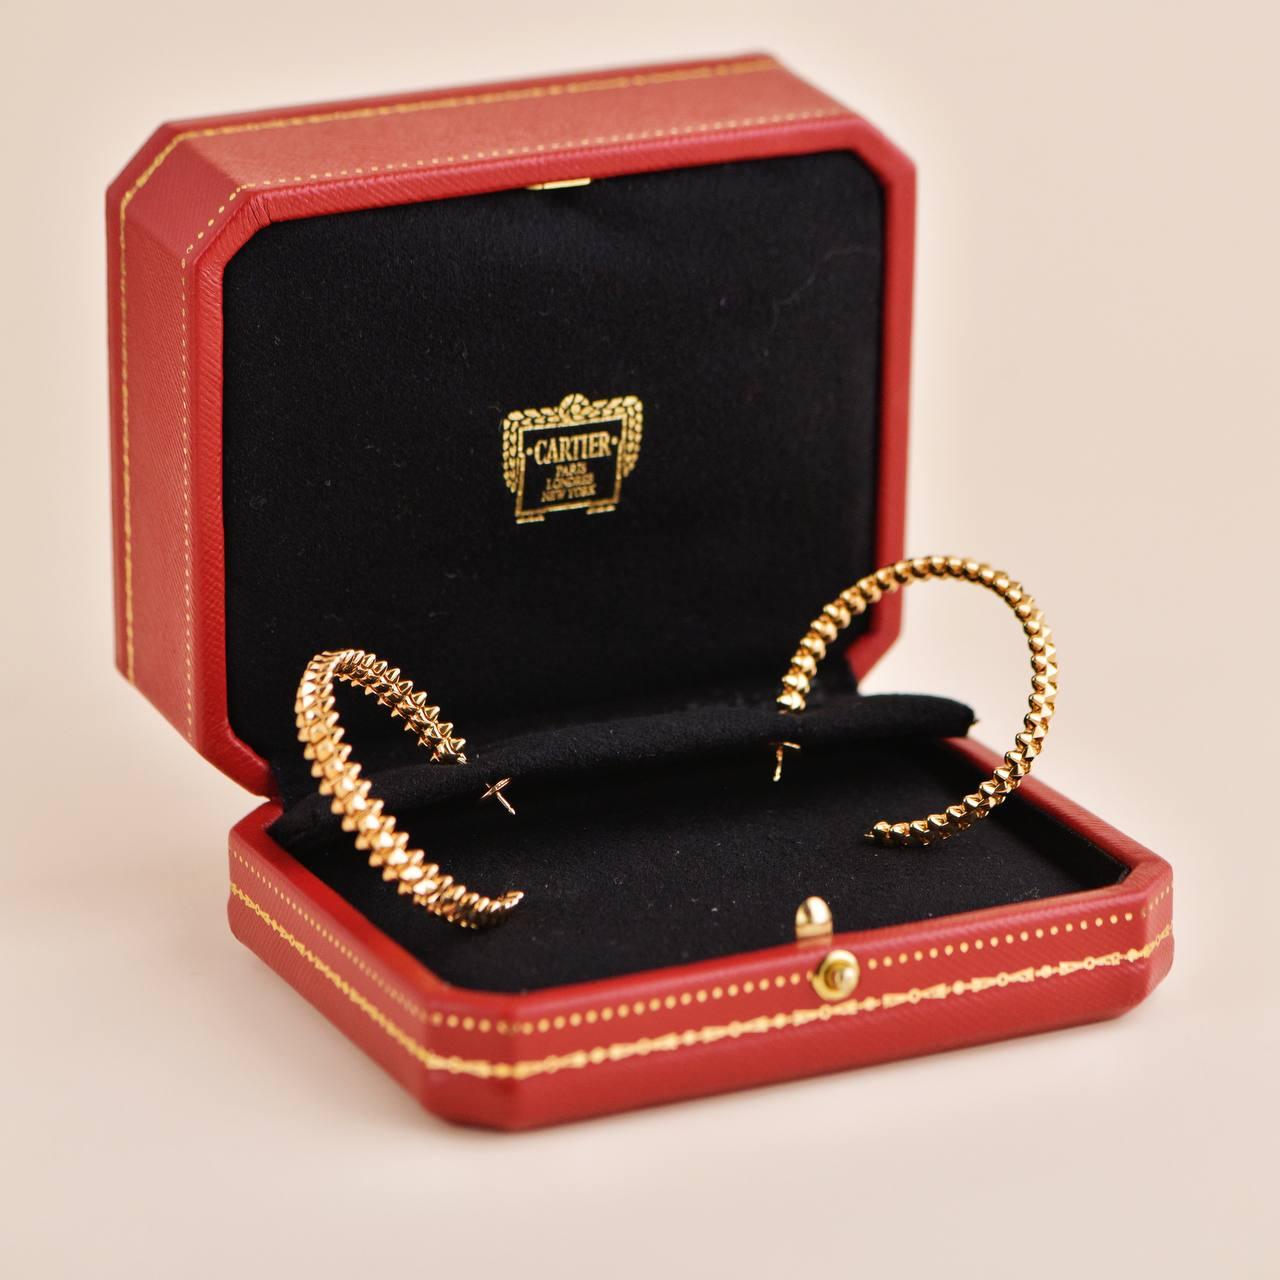 SKU AT-1885
Brand Cartier
Model B8301416
Date Circa 2020
Retail Price £ 8,100 incl. VAT/ € 9 150 incl. VAT/ $8,450
__________________________________
Metal 18K Rose Gold
Serial No. LQ****
Width Approx 6.4